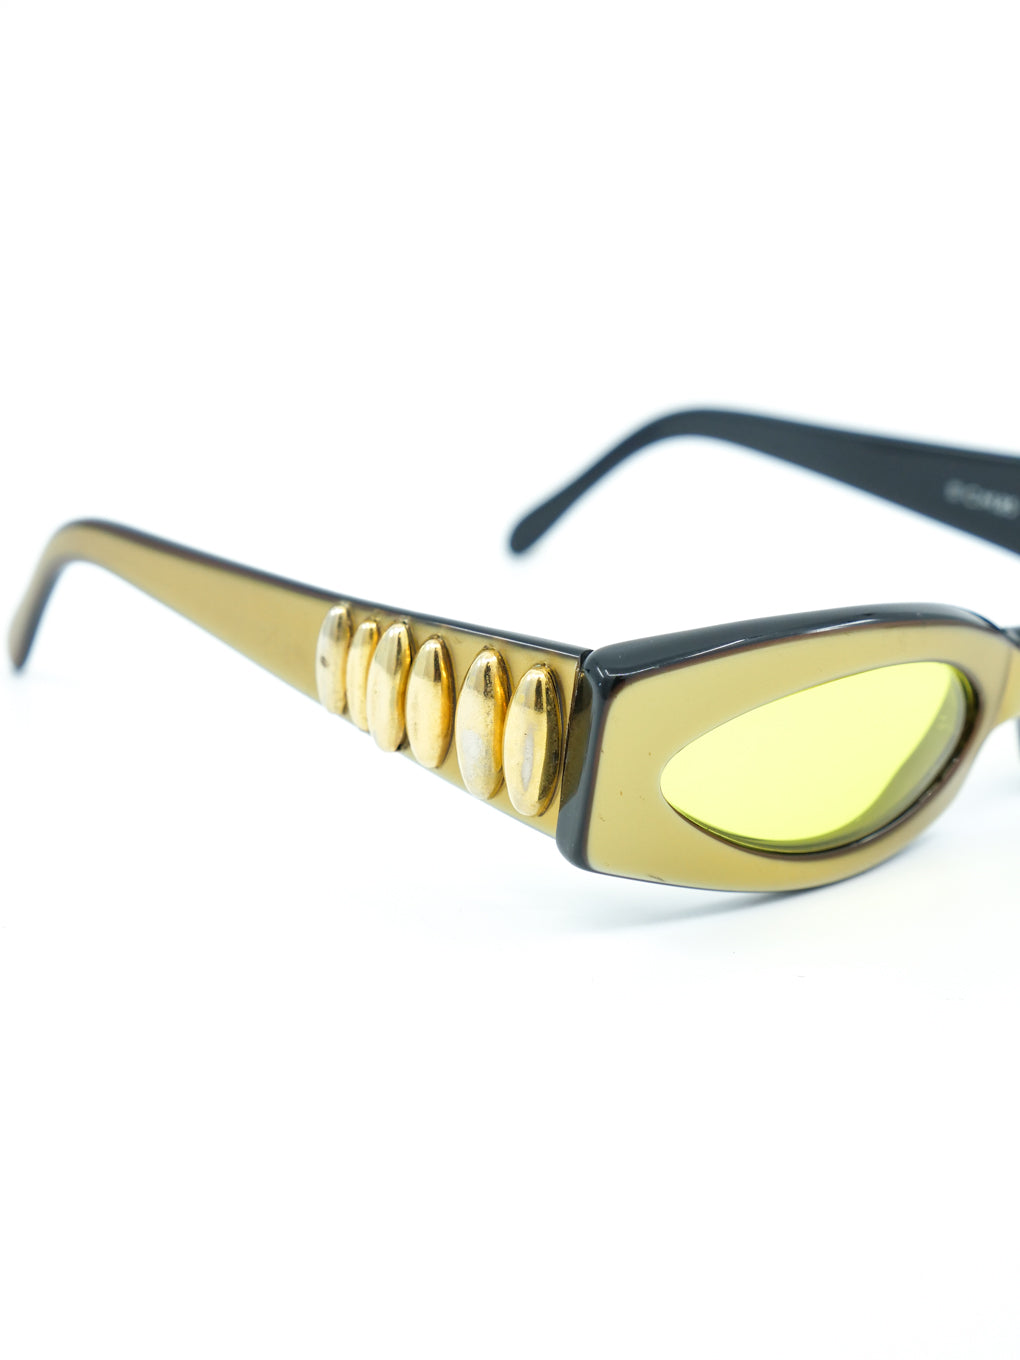 Alain Mikli Tinted Round-Frame Sunglasses